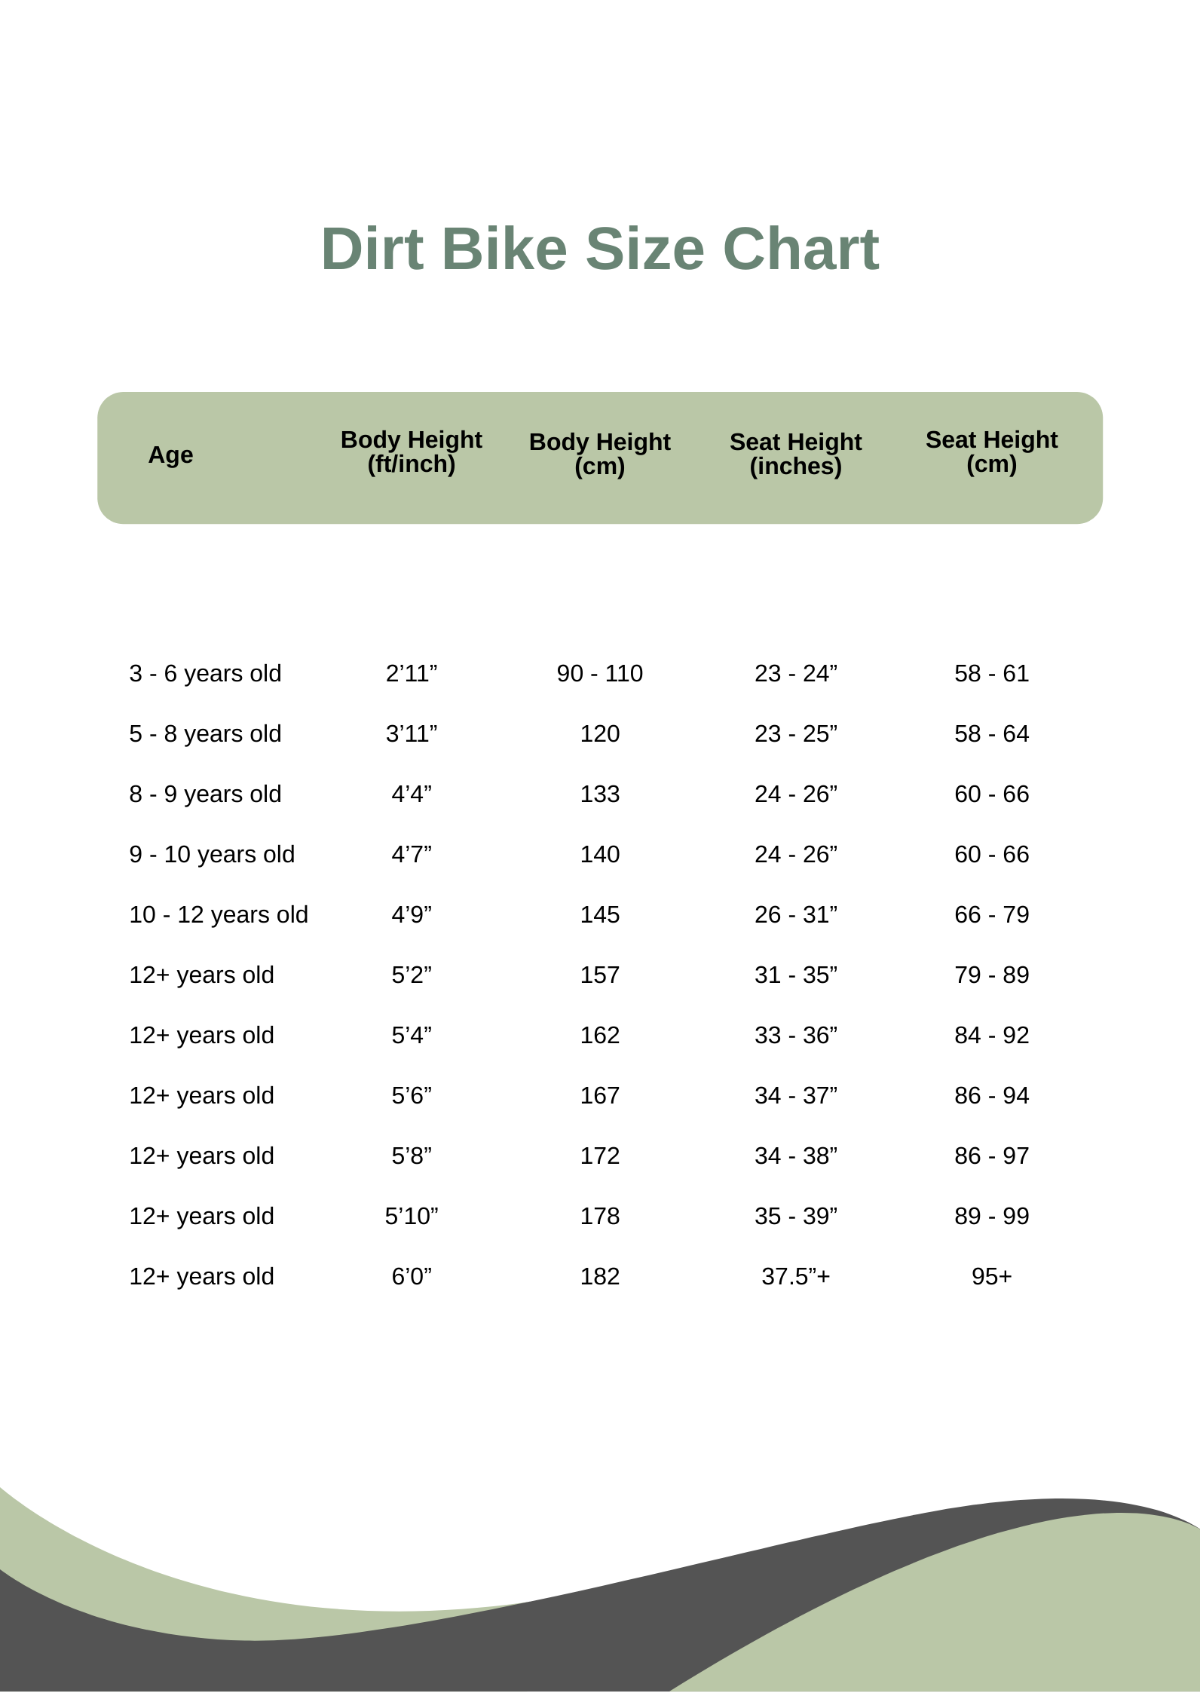 Dirt Bike Size Chart Template